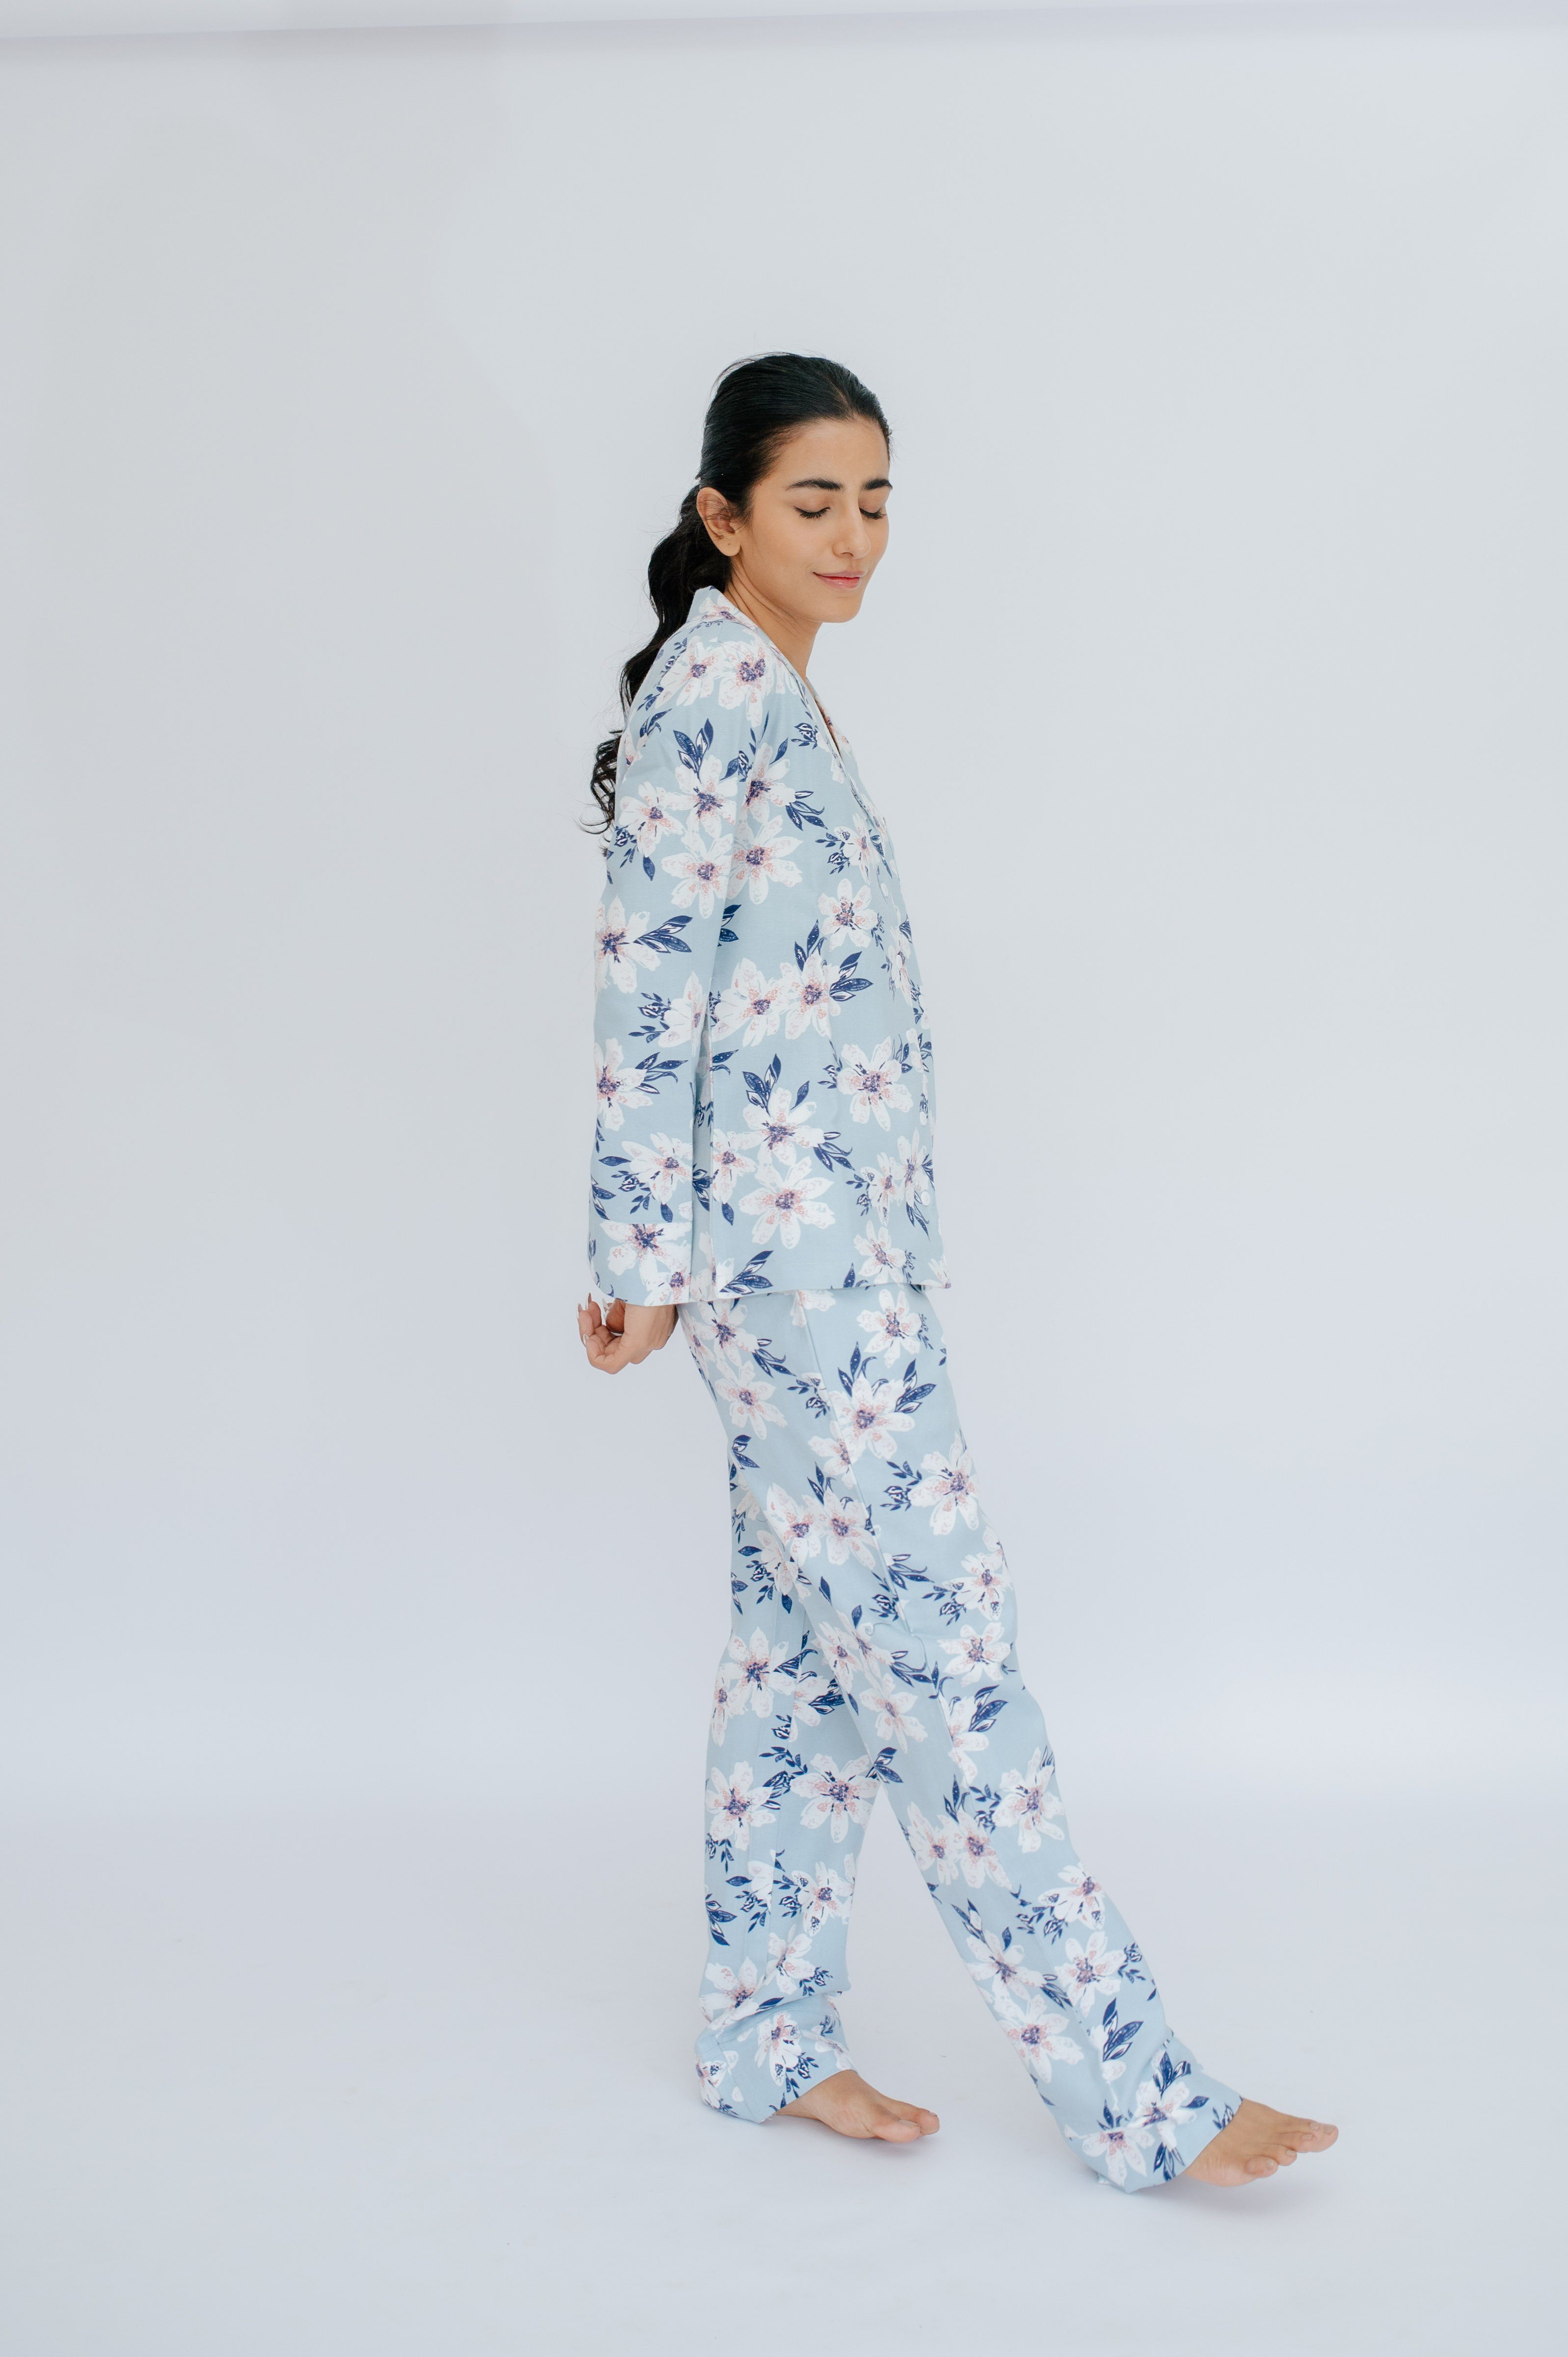 SNOOZE OFF Pyjama Schlafanzug in 1 mit Stück) hellblau Blütendruck tlg., (2